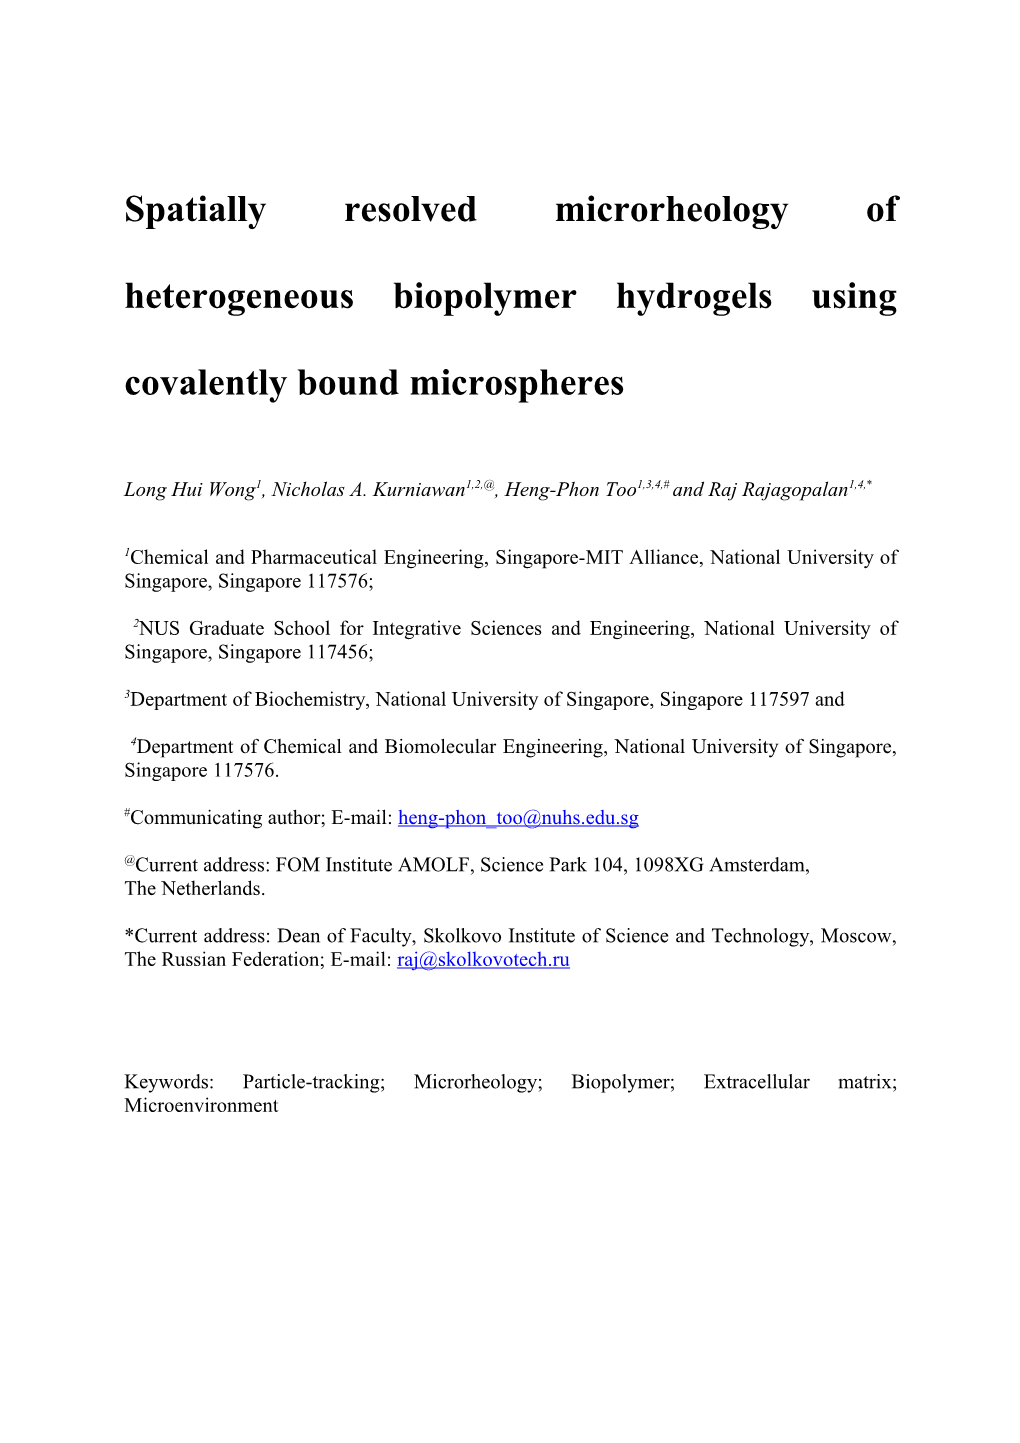 Spatially Resolved Microrheology of Heterogeneous Biopolymer Hydrogels Using Covalently